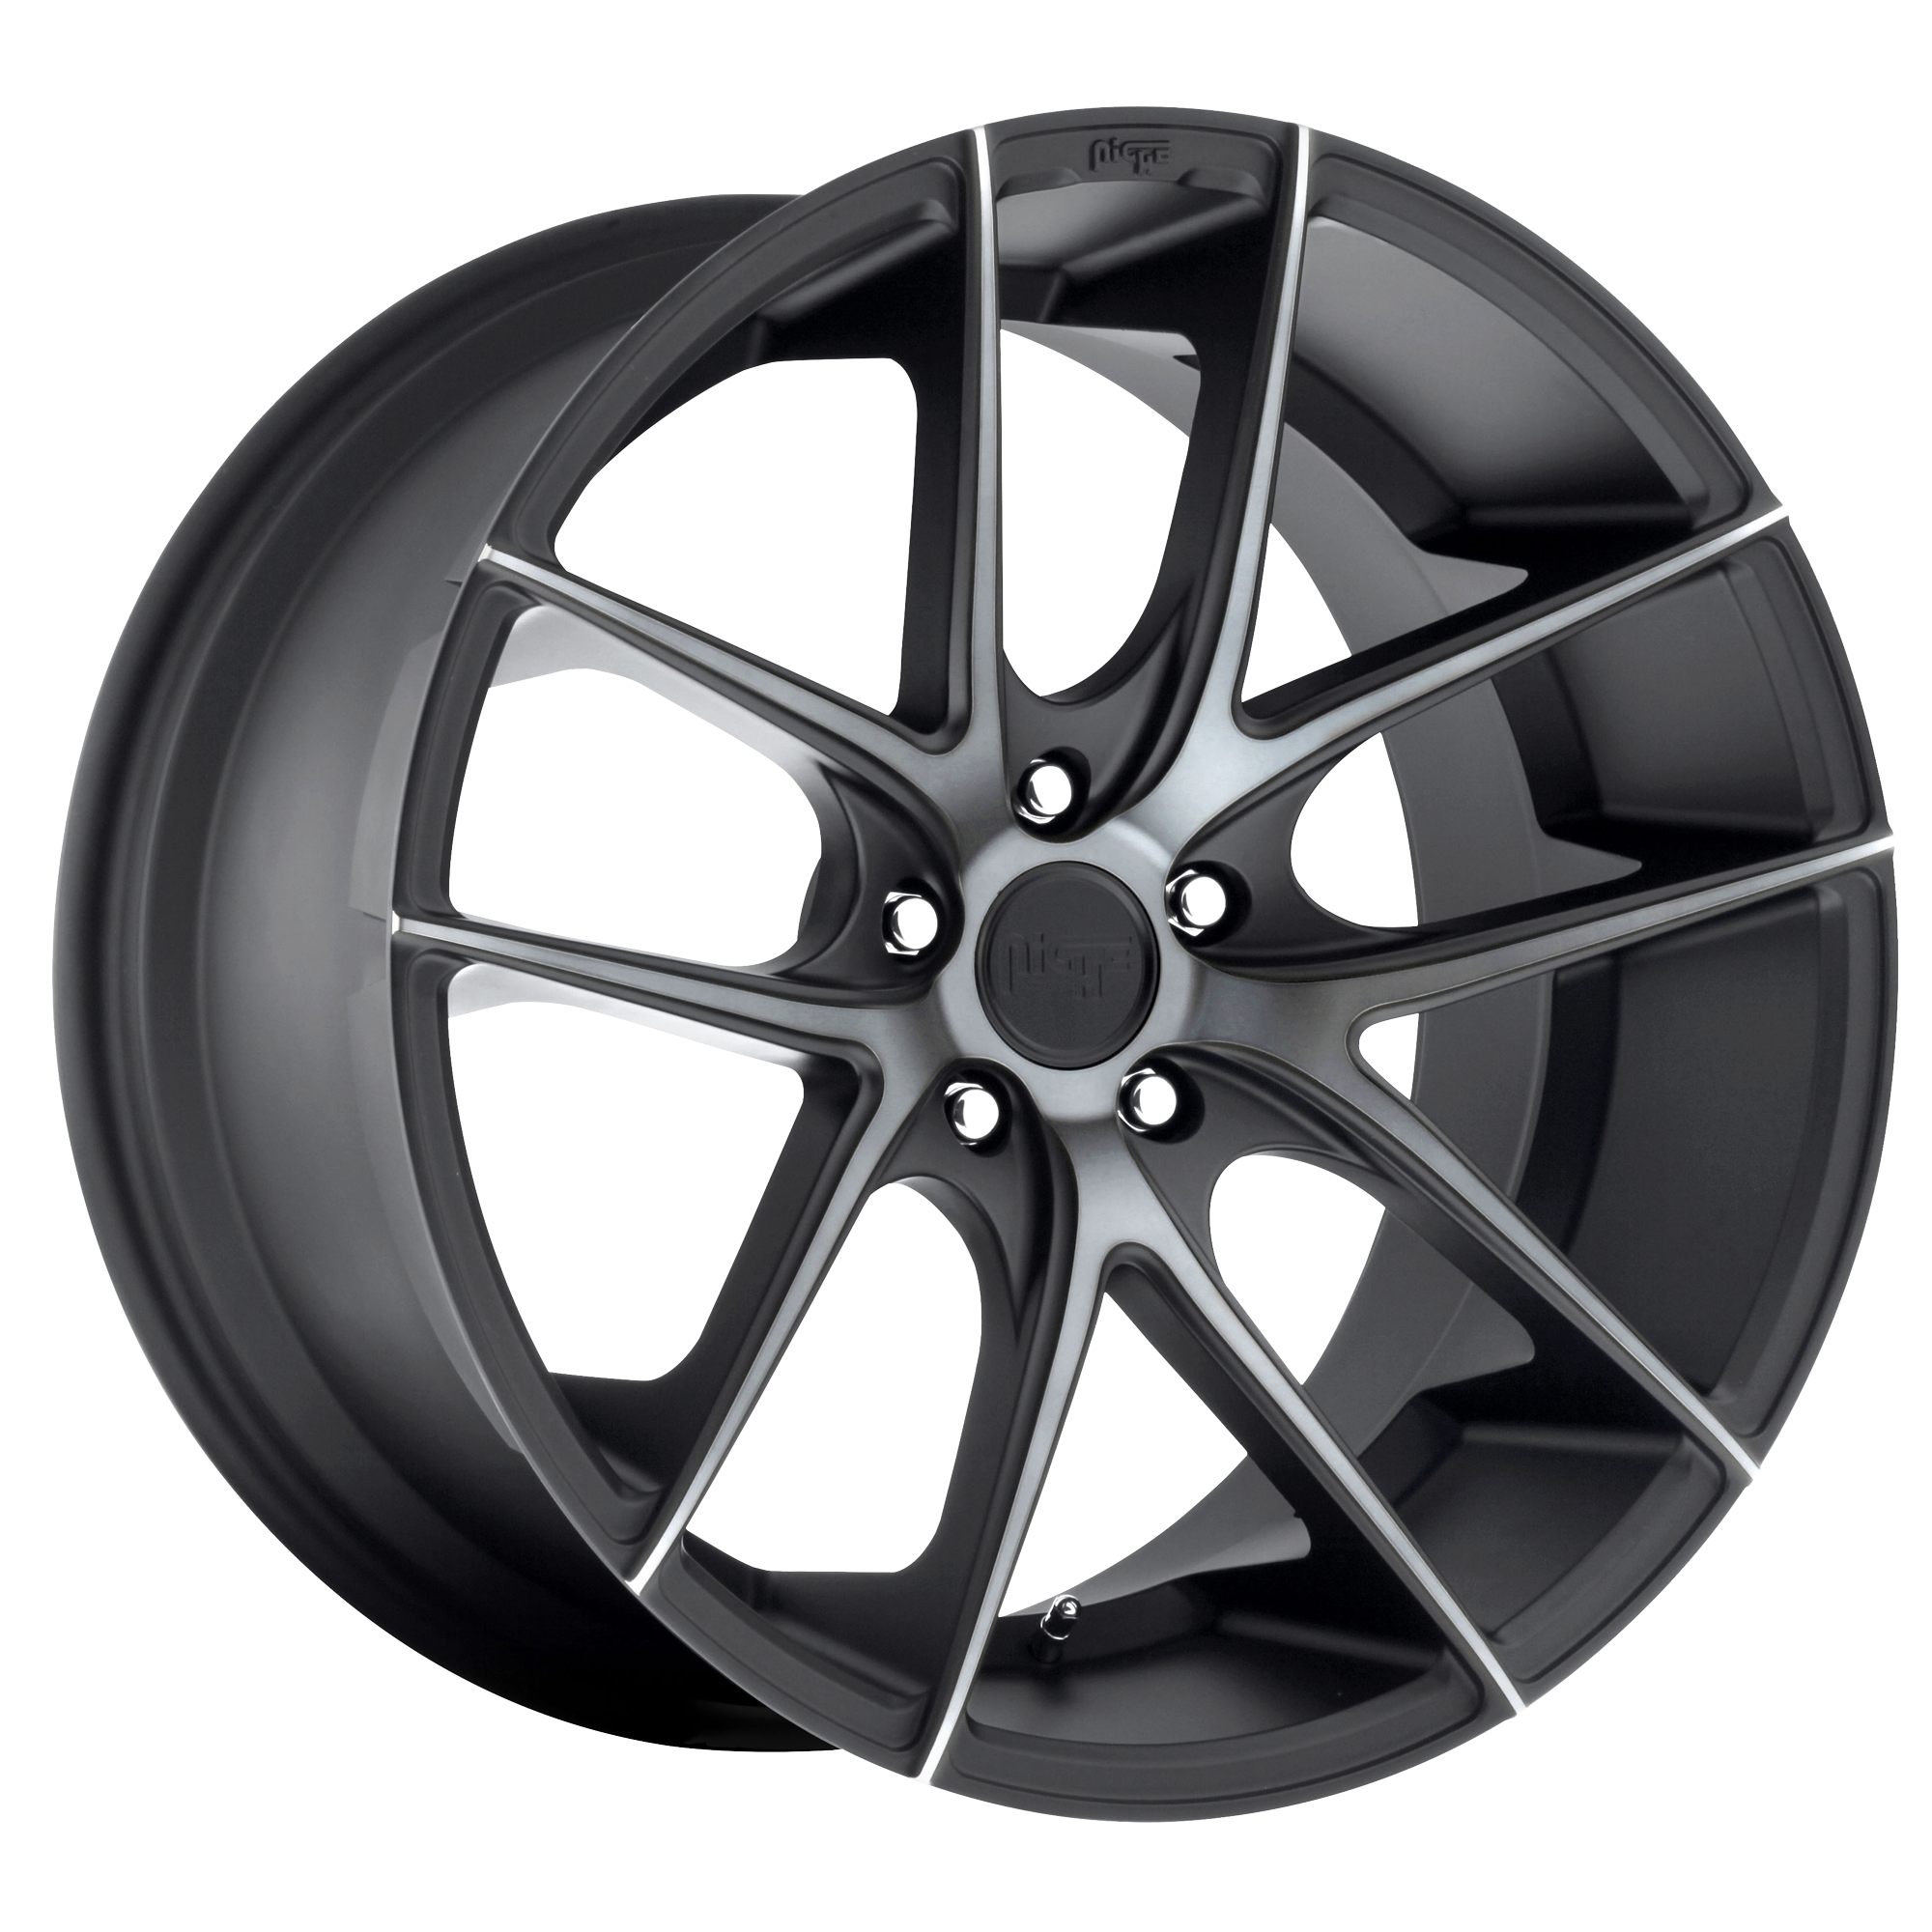 TARGA 20x8.5 5x115.00 MATTE BLACK DOUBLE DARK TINT (15 mm) - Tires and Engine Performance